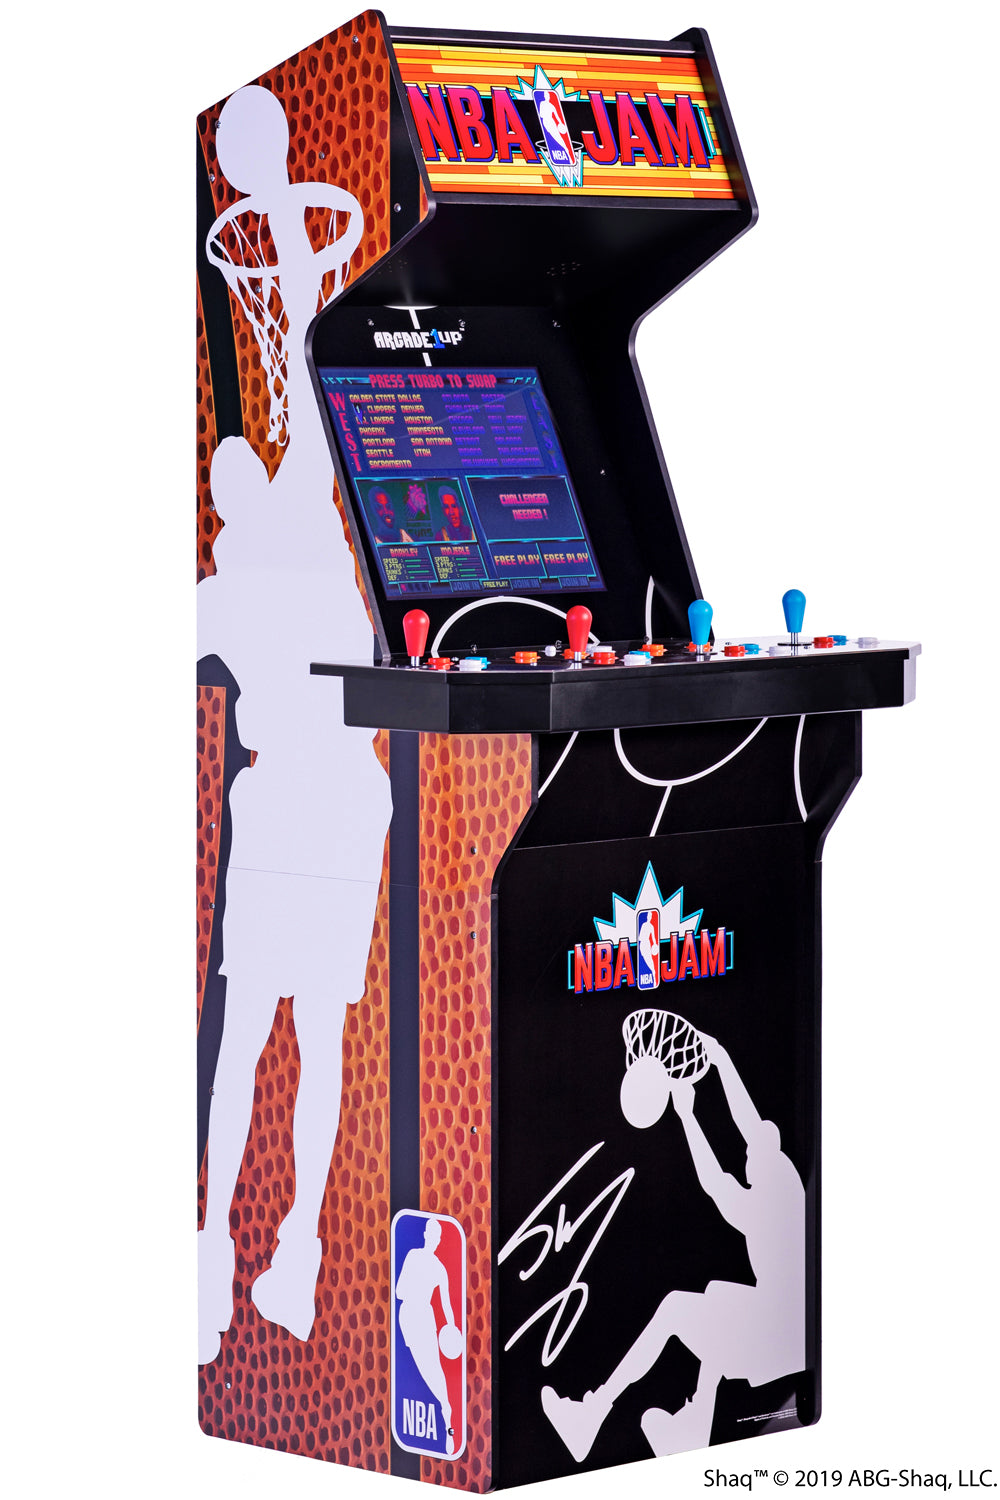 Arcade1Up The Fortune 500 Bundle - Arcade 1up® Arcade Cabinets